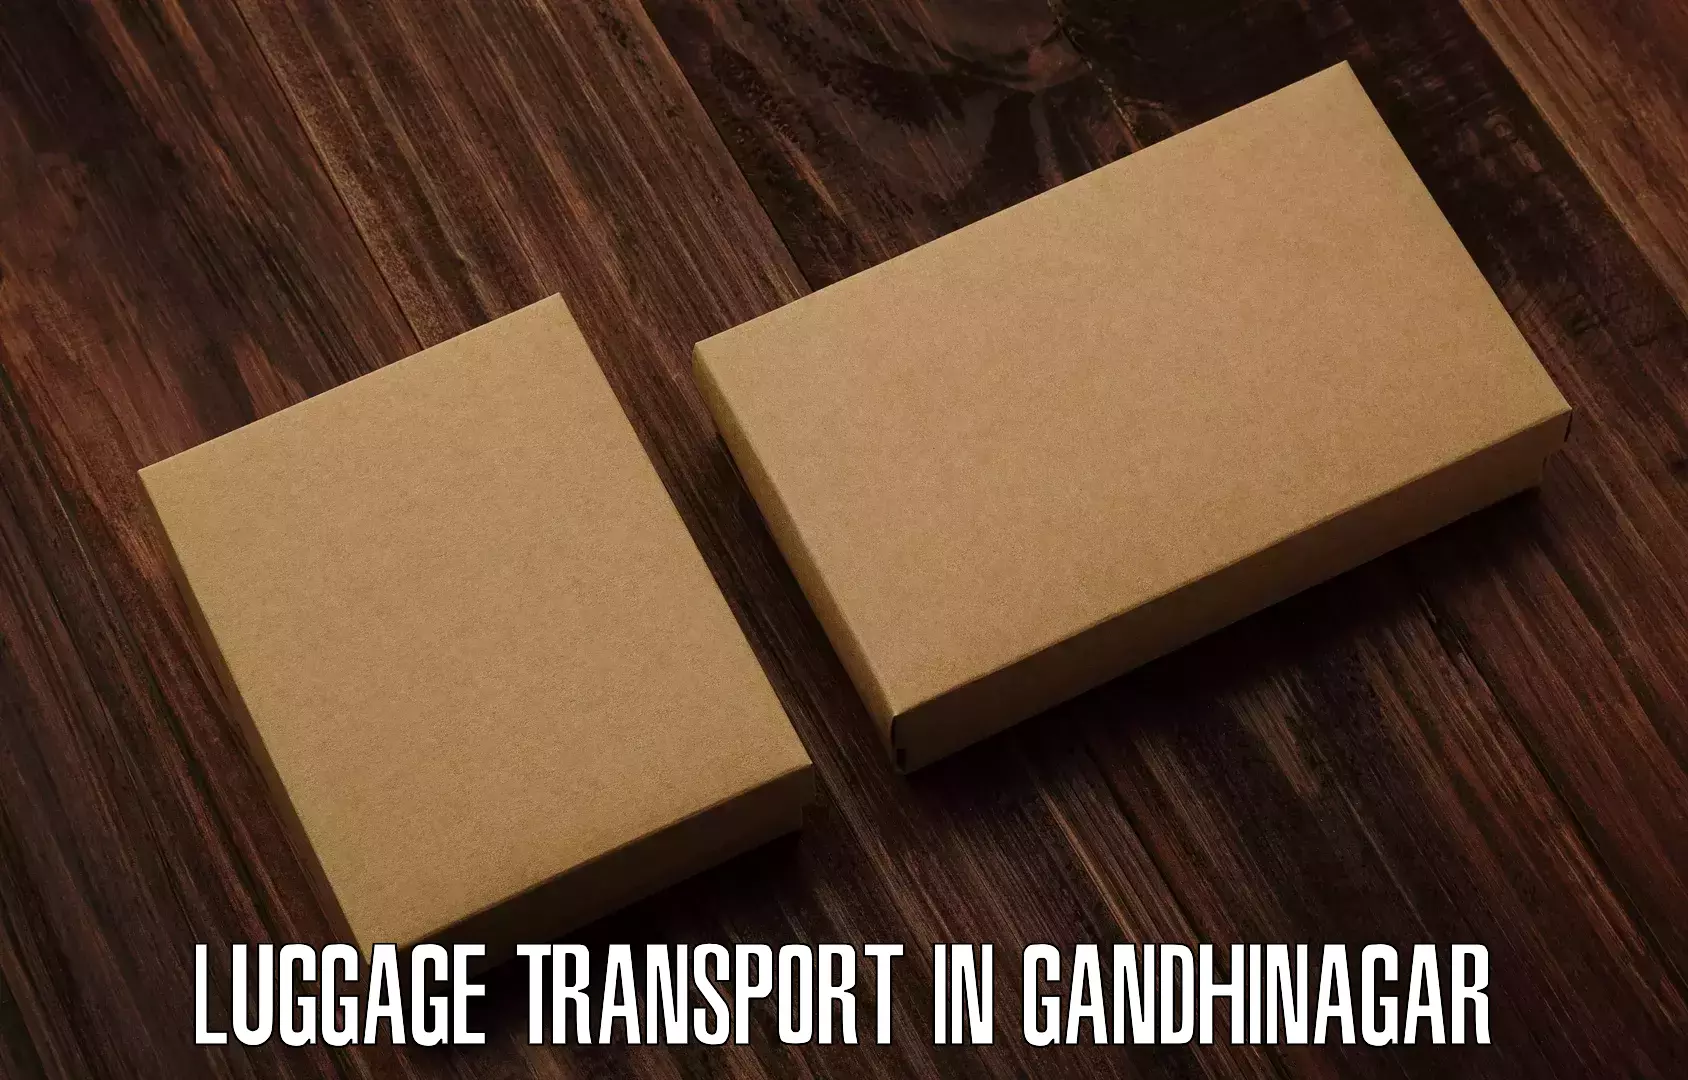 Luggage shipment tracking in Gandhinagar